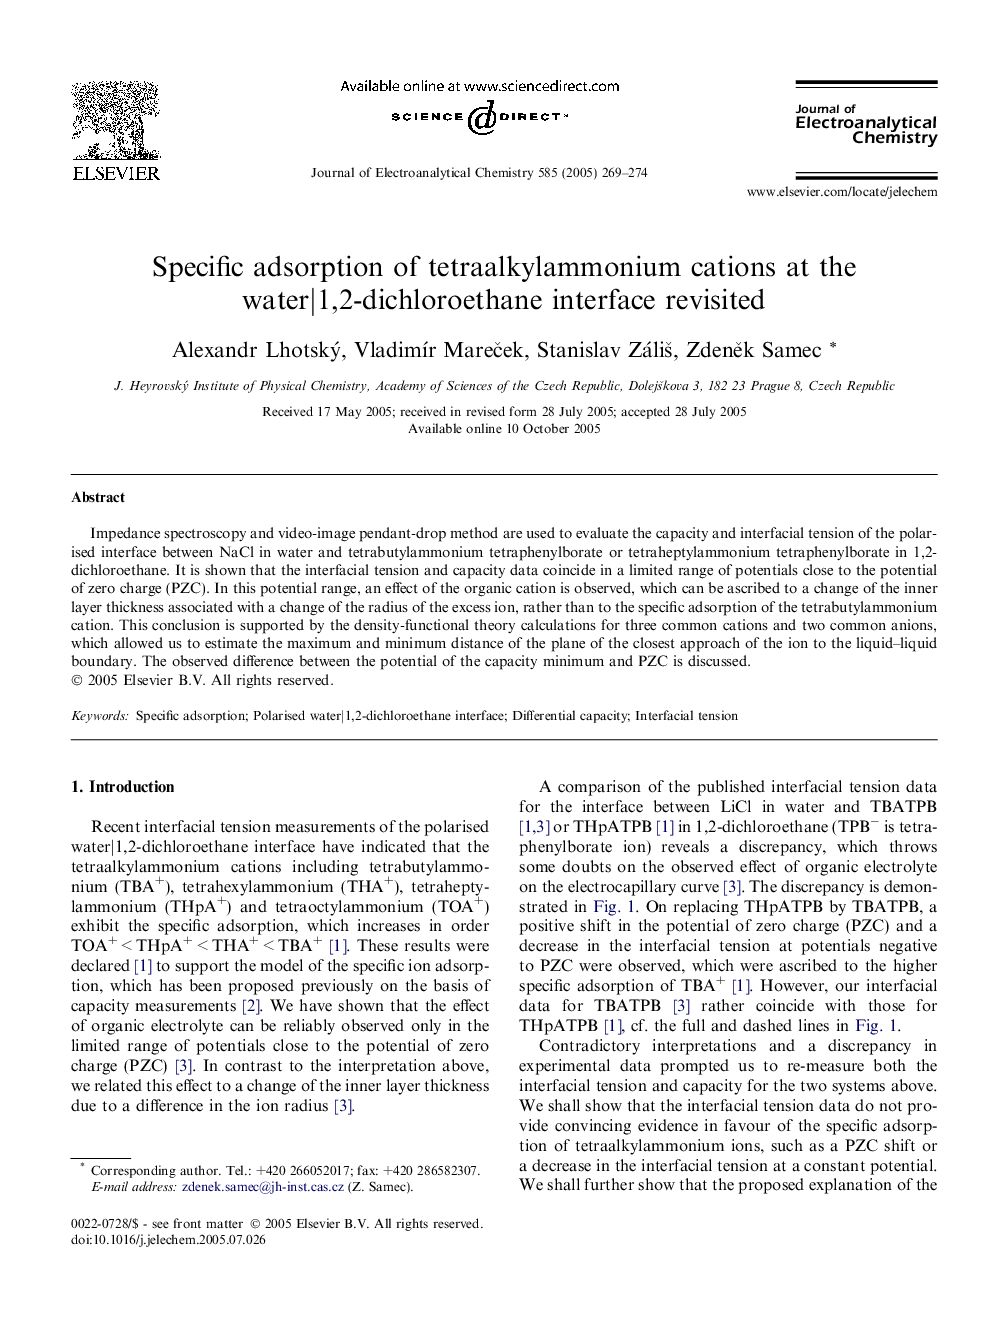 Specific adsorption of tetraalkylammonium cations at the waterâ£1,2-dichloroethane interface revisited